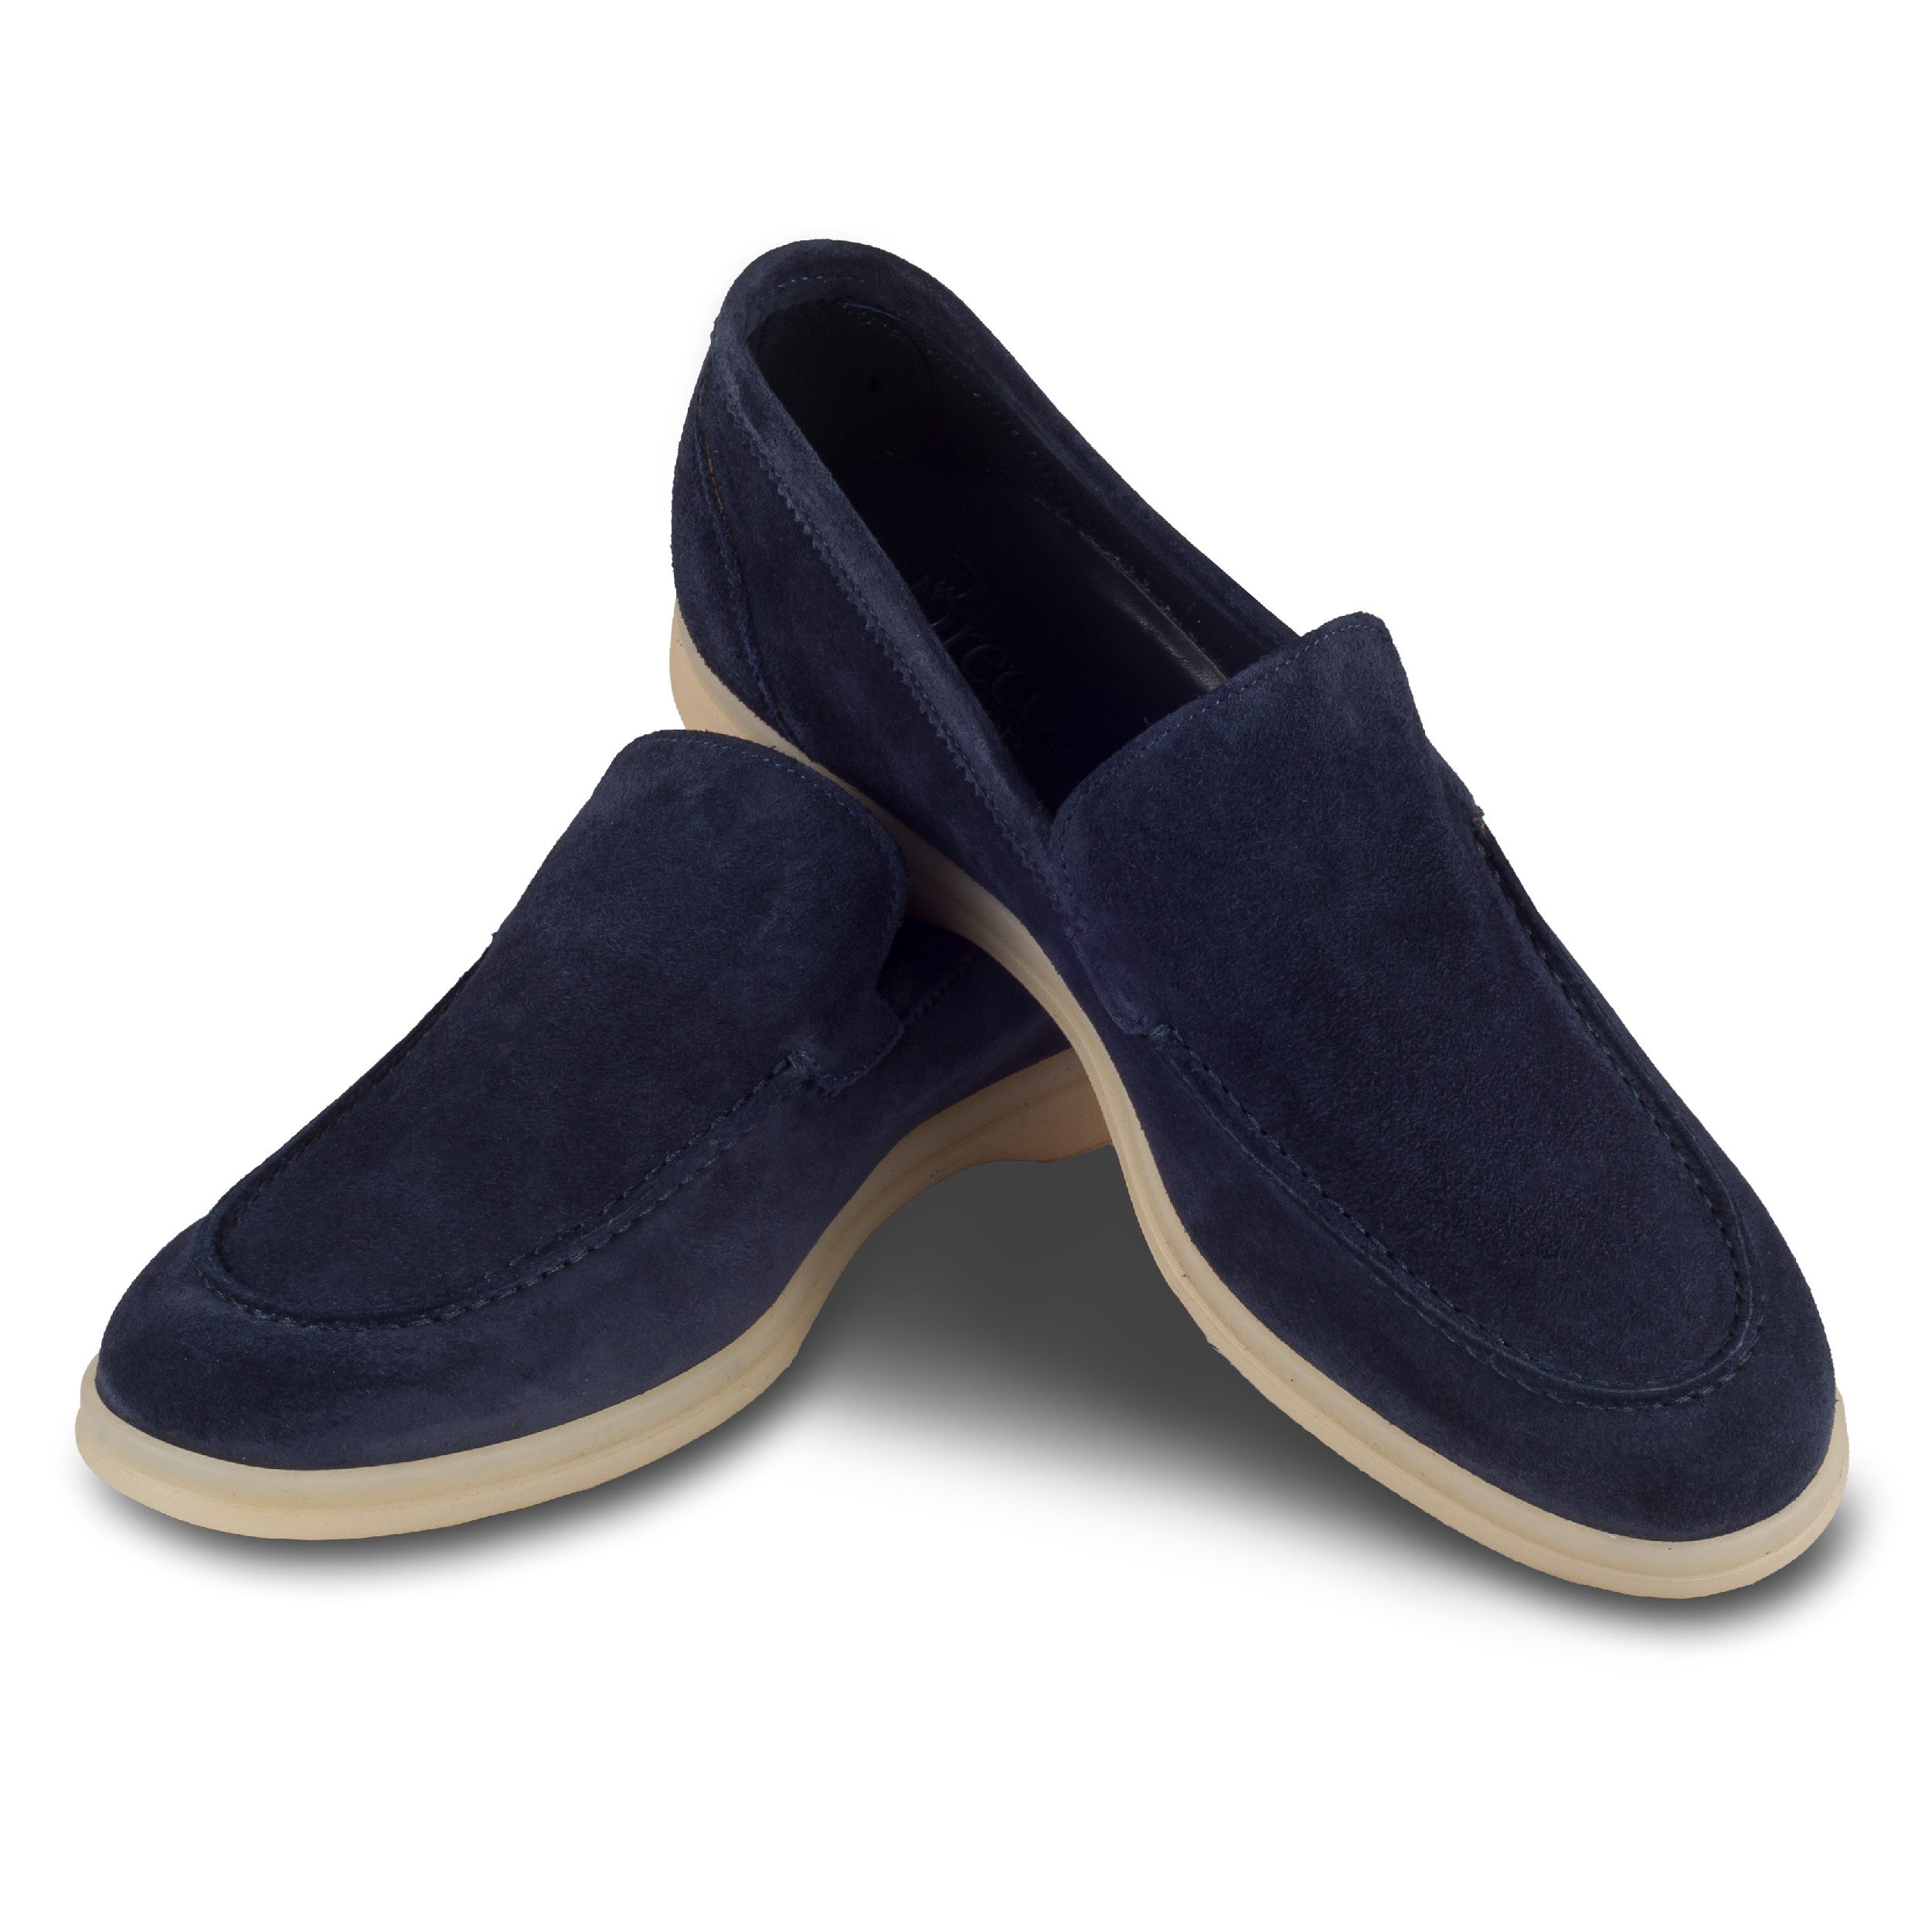 BRECOS Leichter Mokassin / Loafer aus Veloursleder in blau, Gummisohle Loafer Handgefertigt in Italien